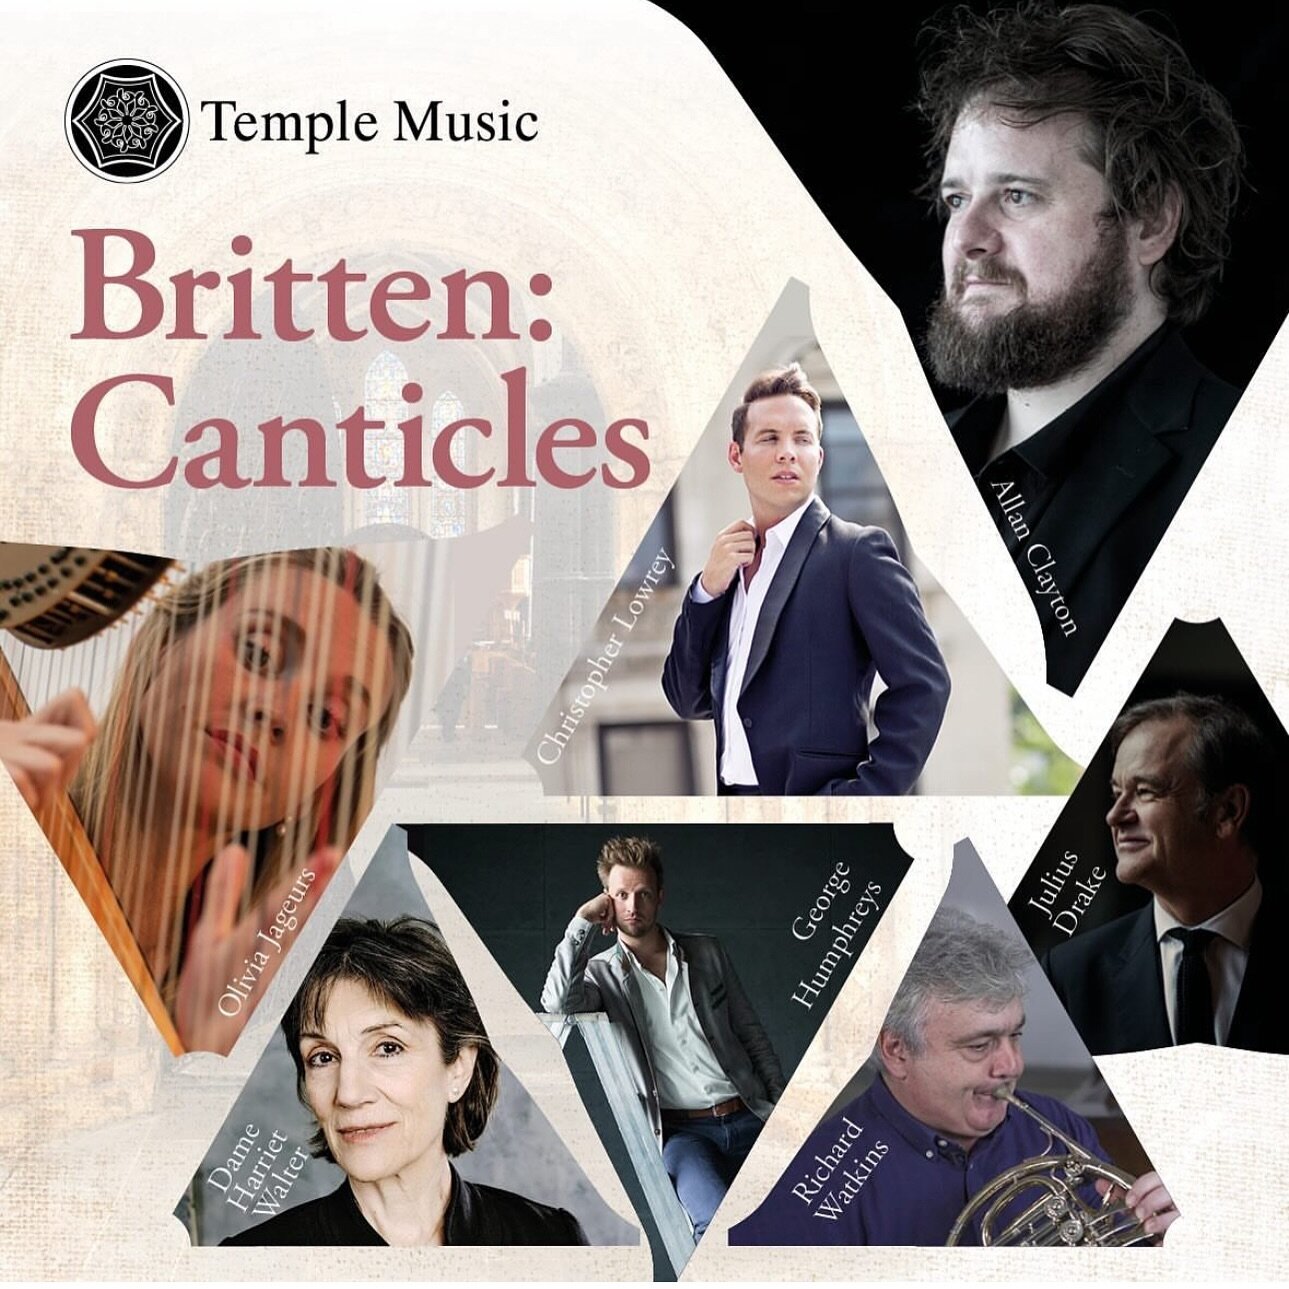 Britten: Canticles - thank you @templemusicfdn for a very special evening last night. #Britten #allanclayton @juliusdrakepiano